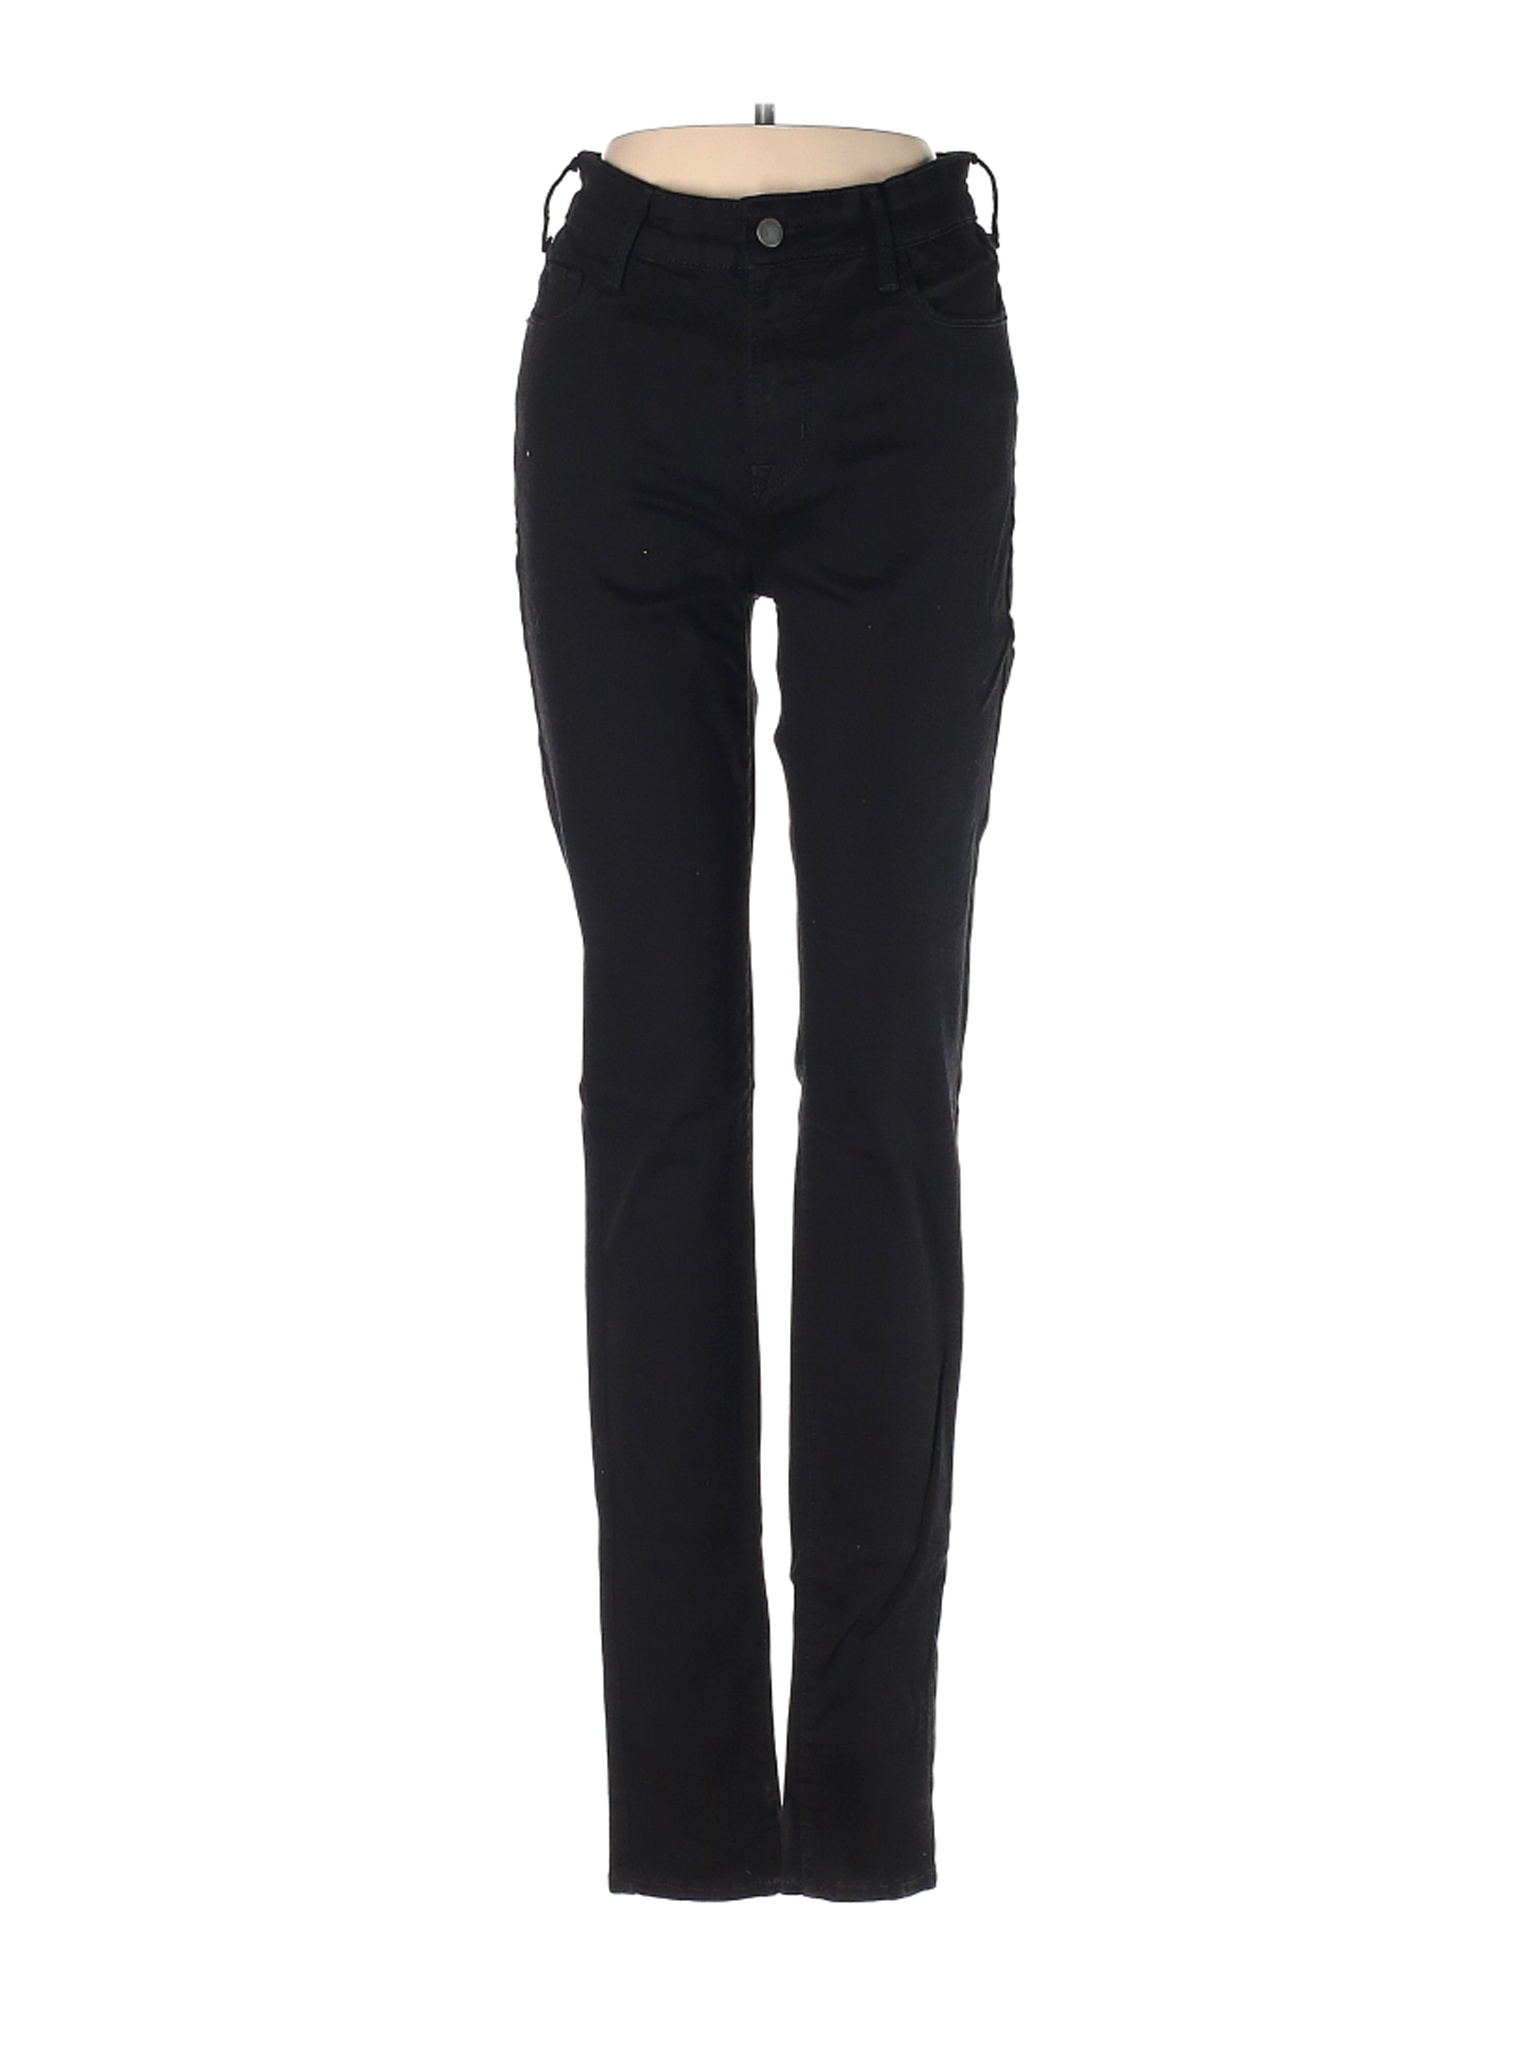 Old Navy Women Black Jeans 6 Tall | eBay